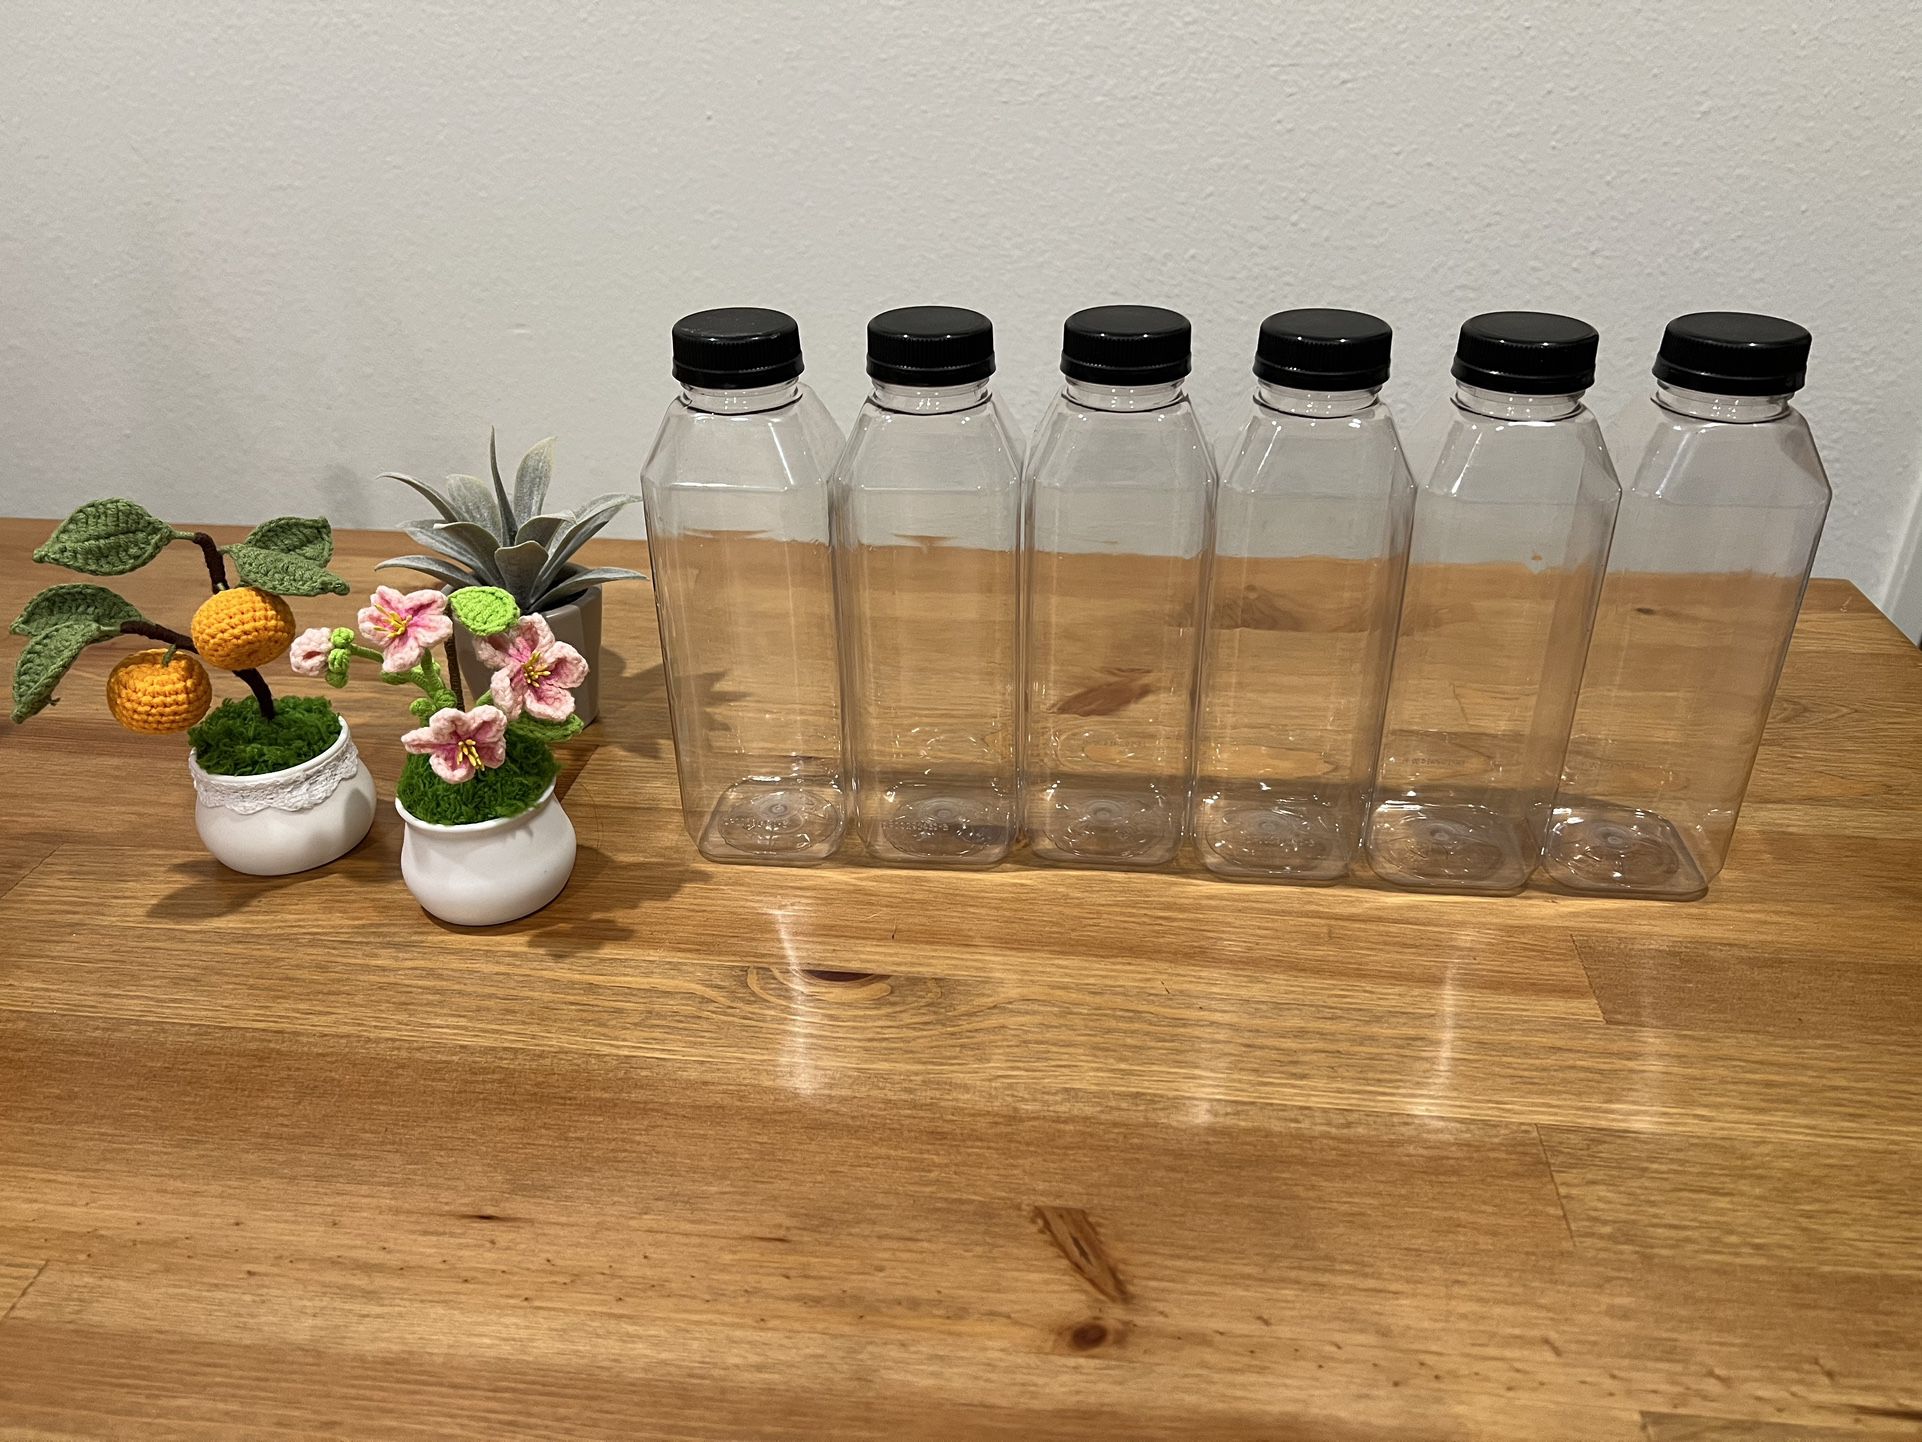 Plastic 16Oz Juice/Smoothie/Homemade Beverages Bottles with Tamper Evident Caps - 6 Pcs